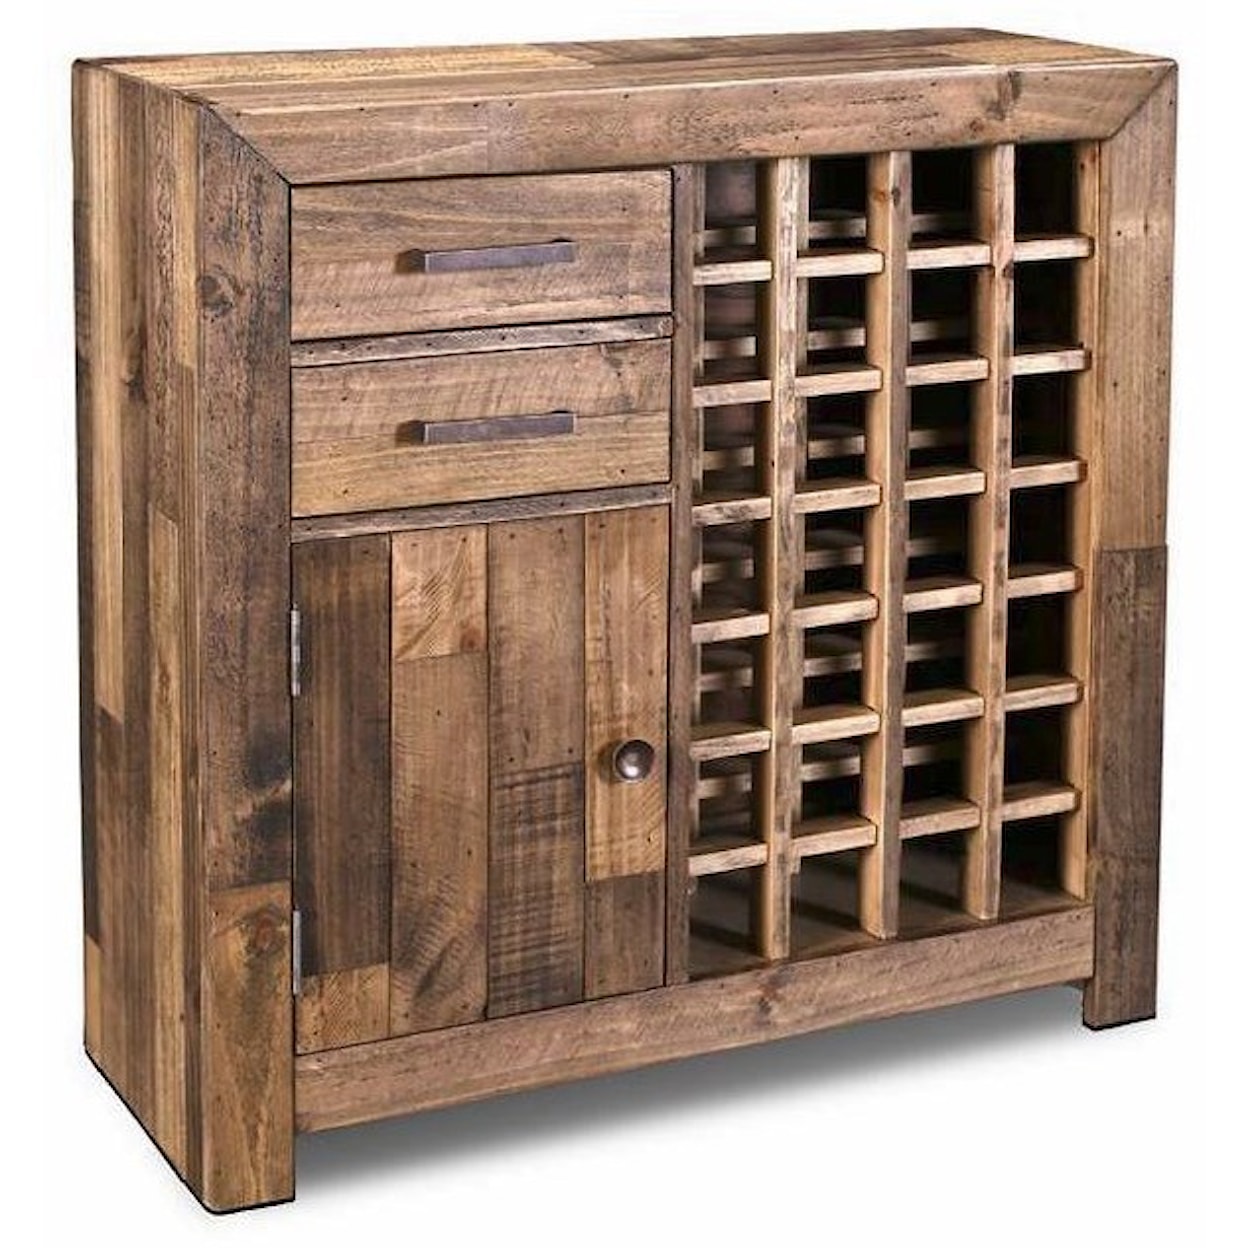 Horizon Home Boardwalk 38” Wine Cabinet